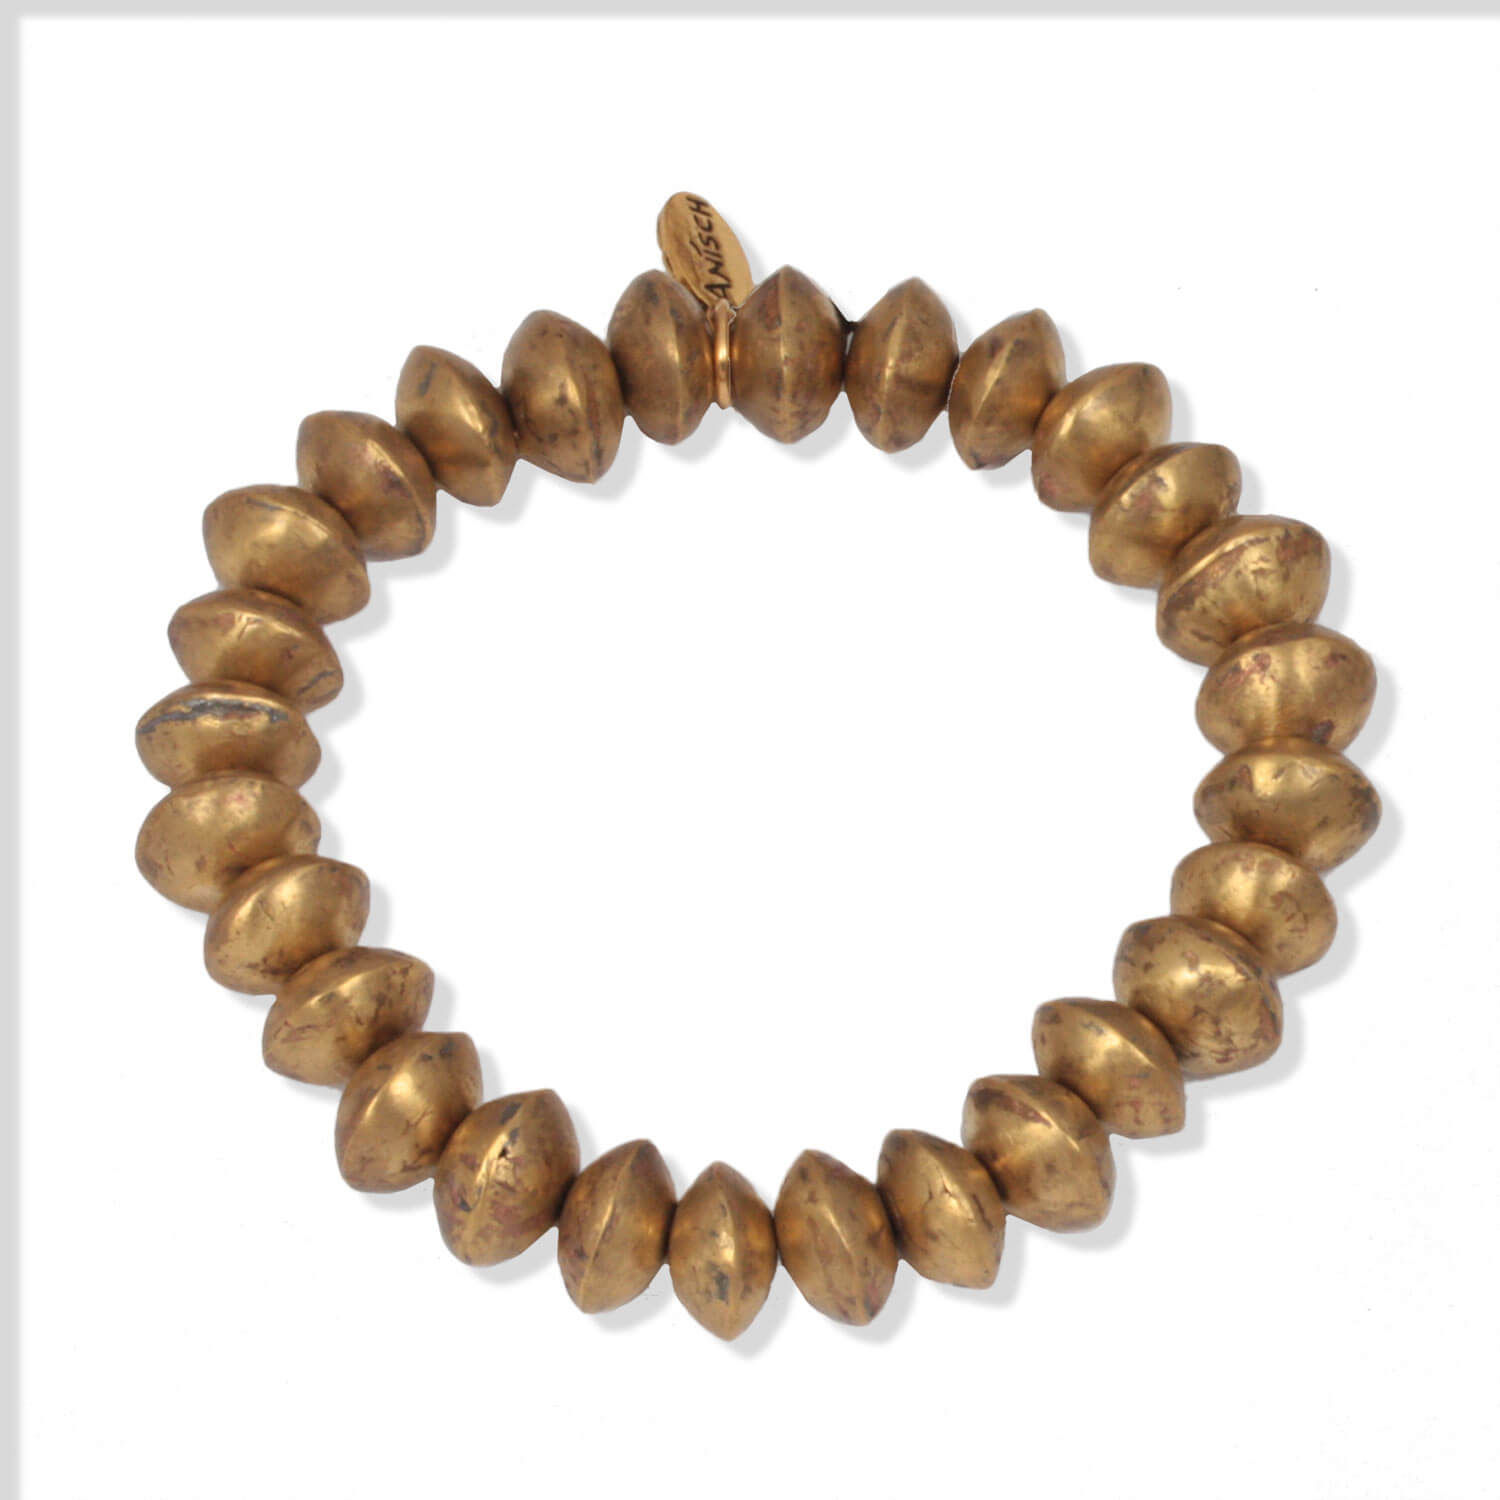 Golden Tuareg Beads - Bracelet according to a millennia-old tradition